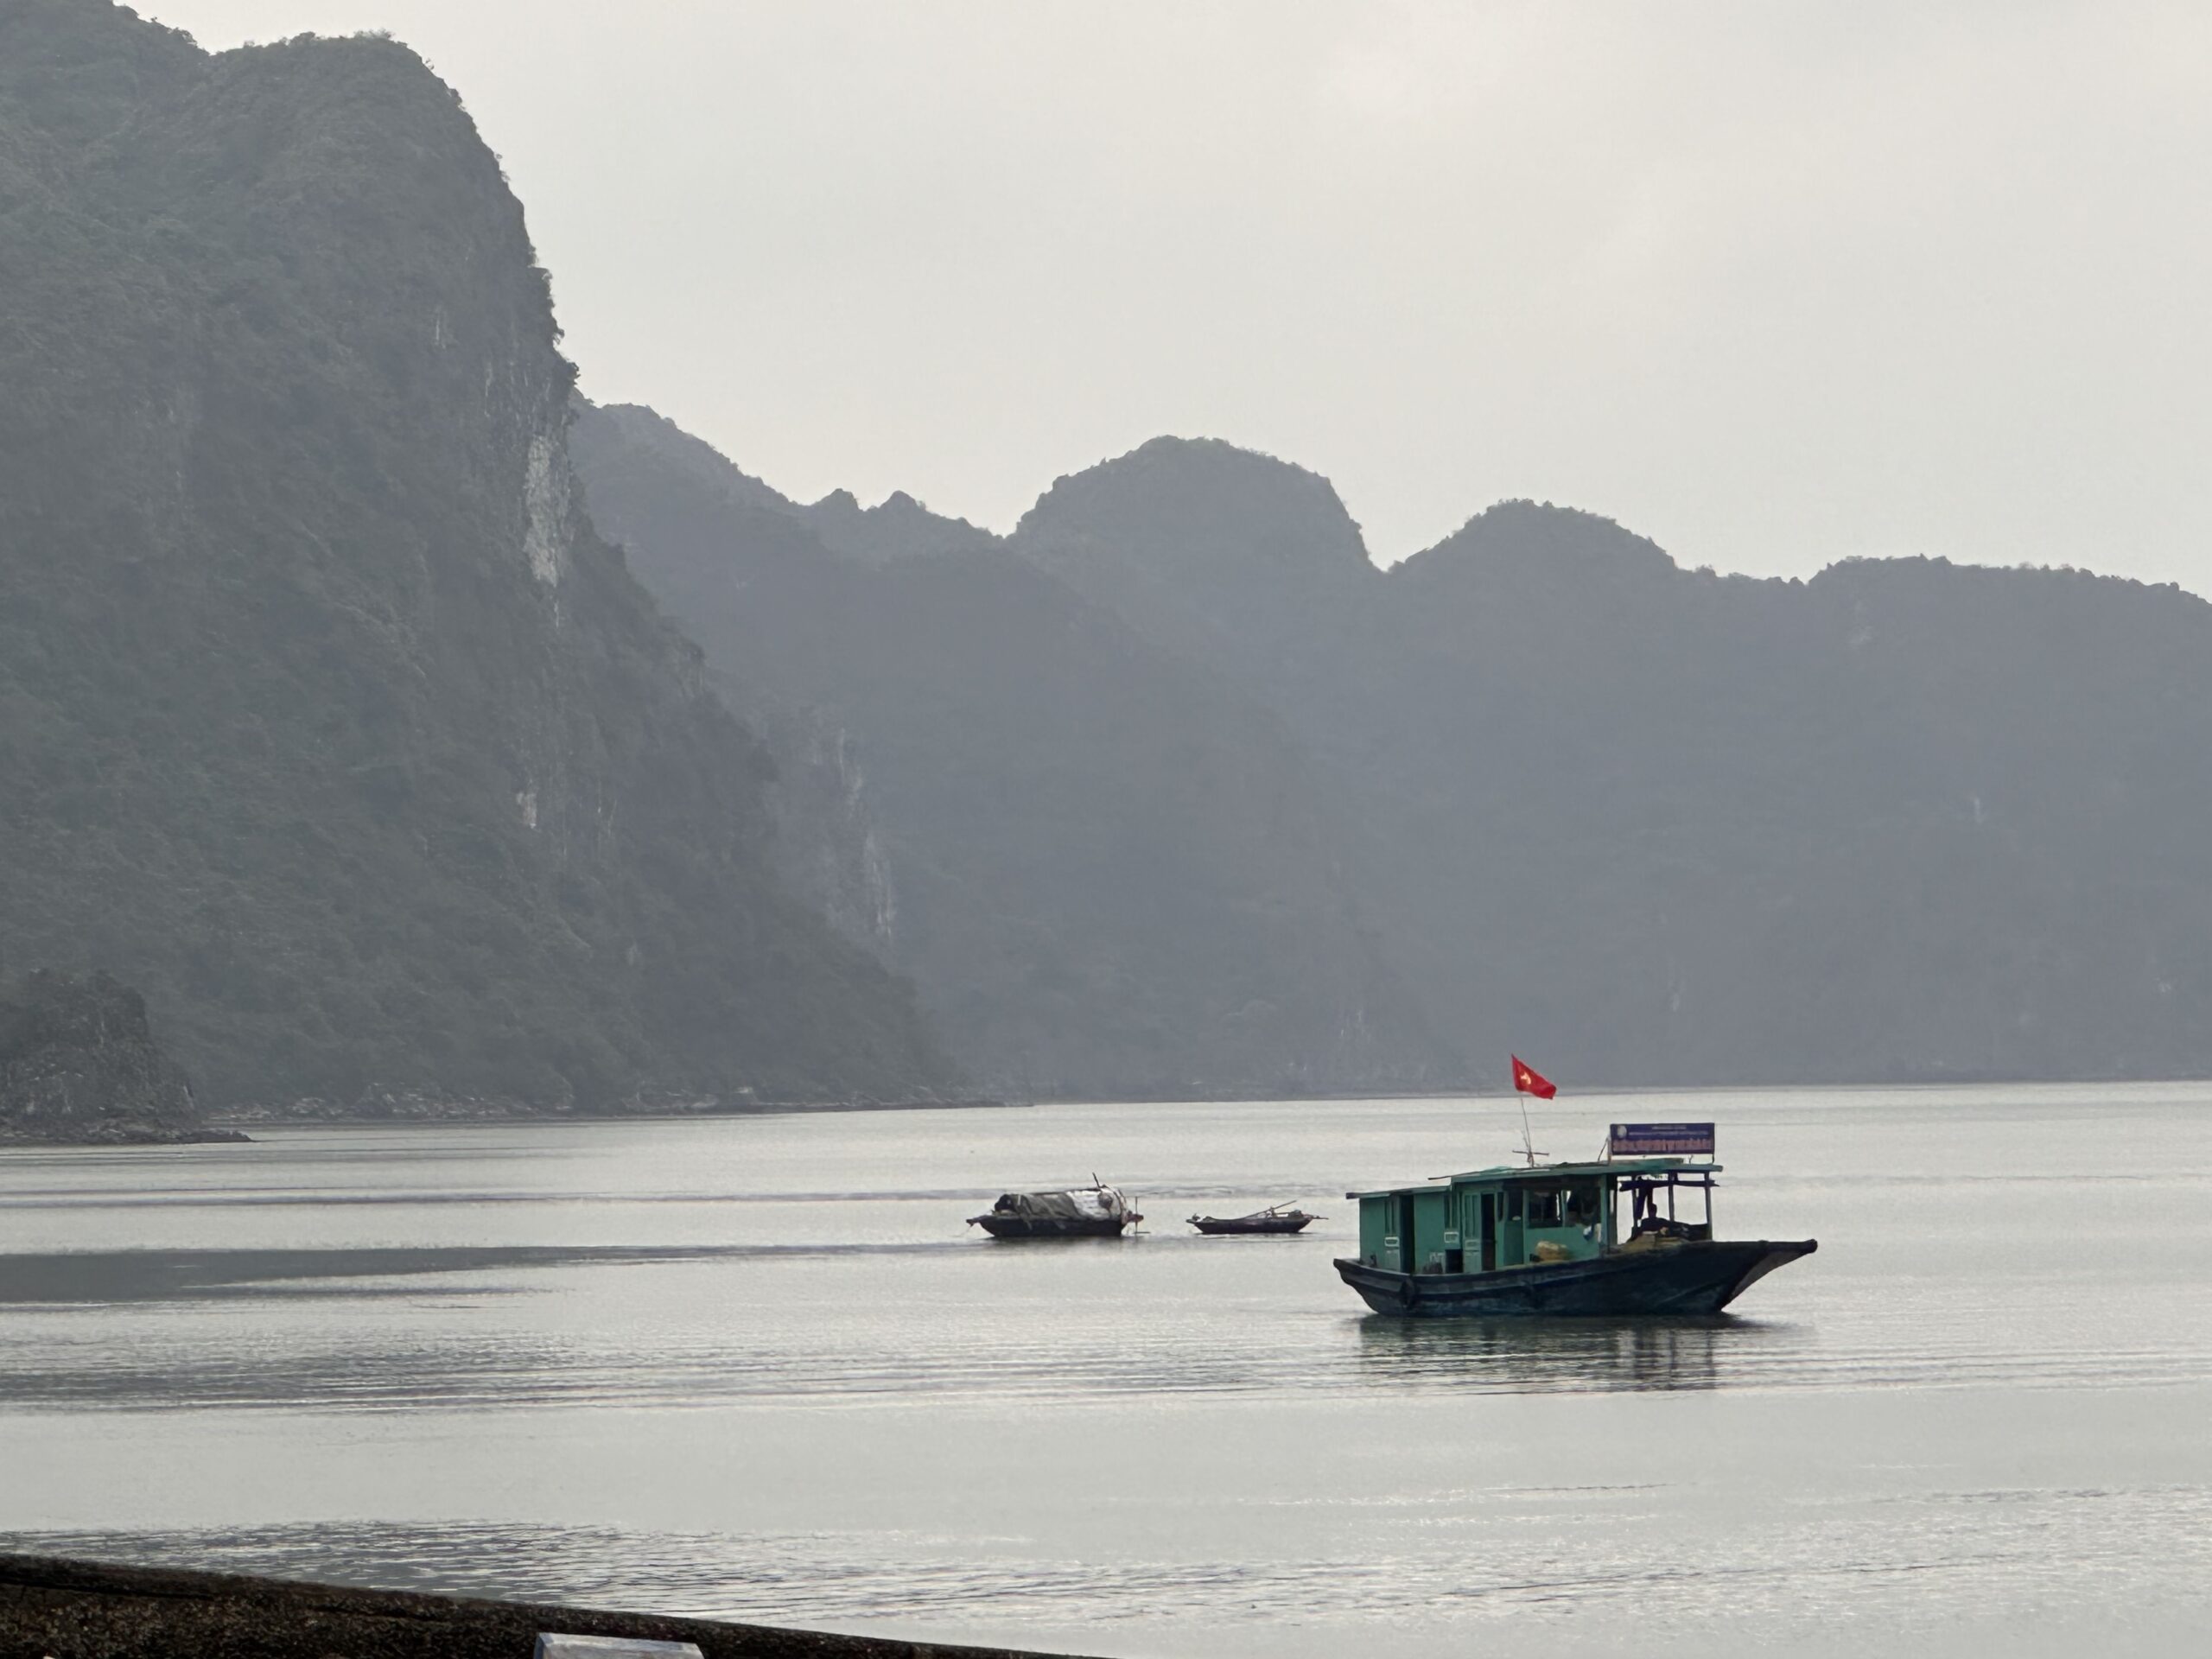 Halong Bay with boats